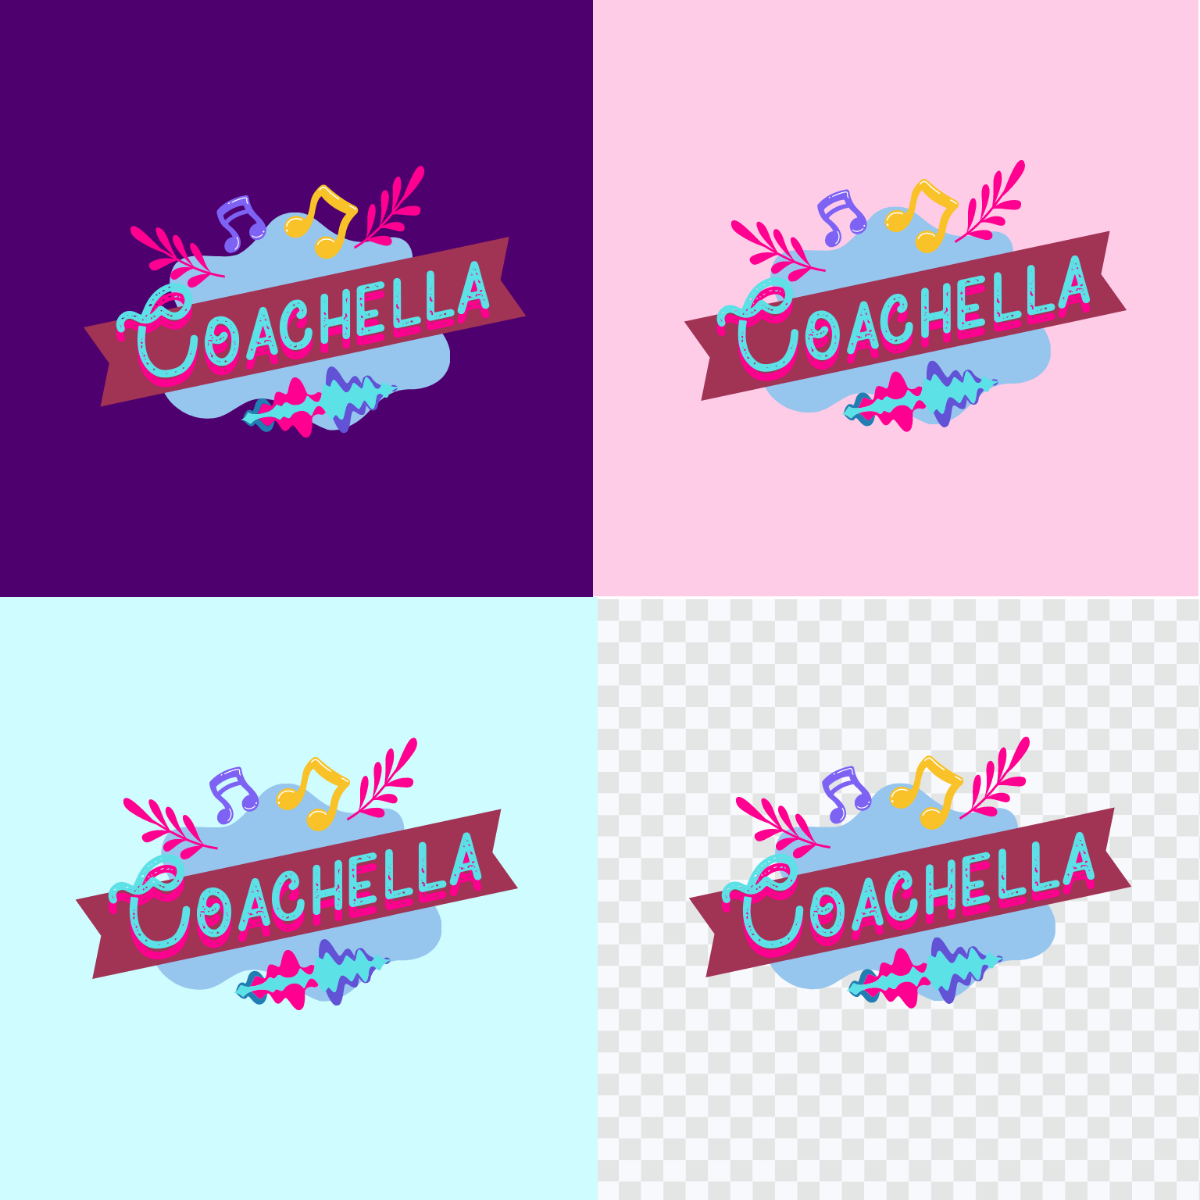 Coachella Logo Template